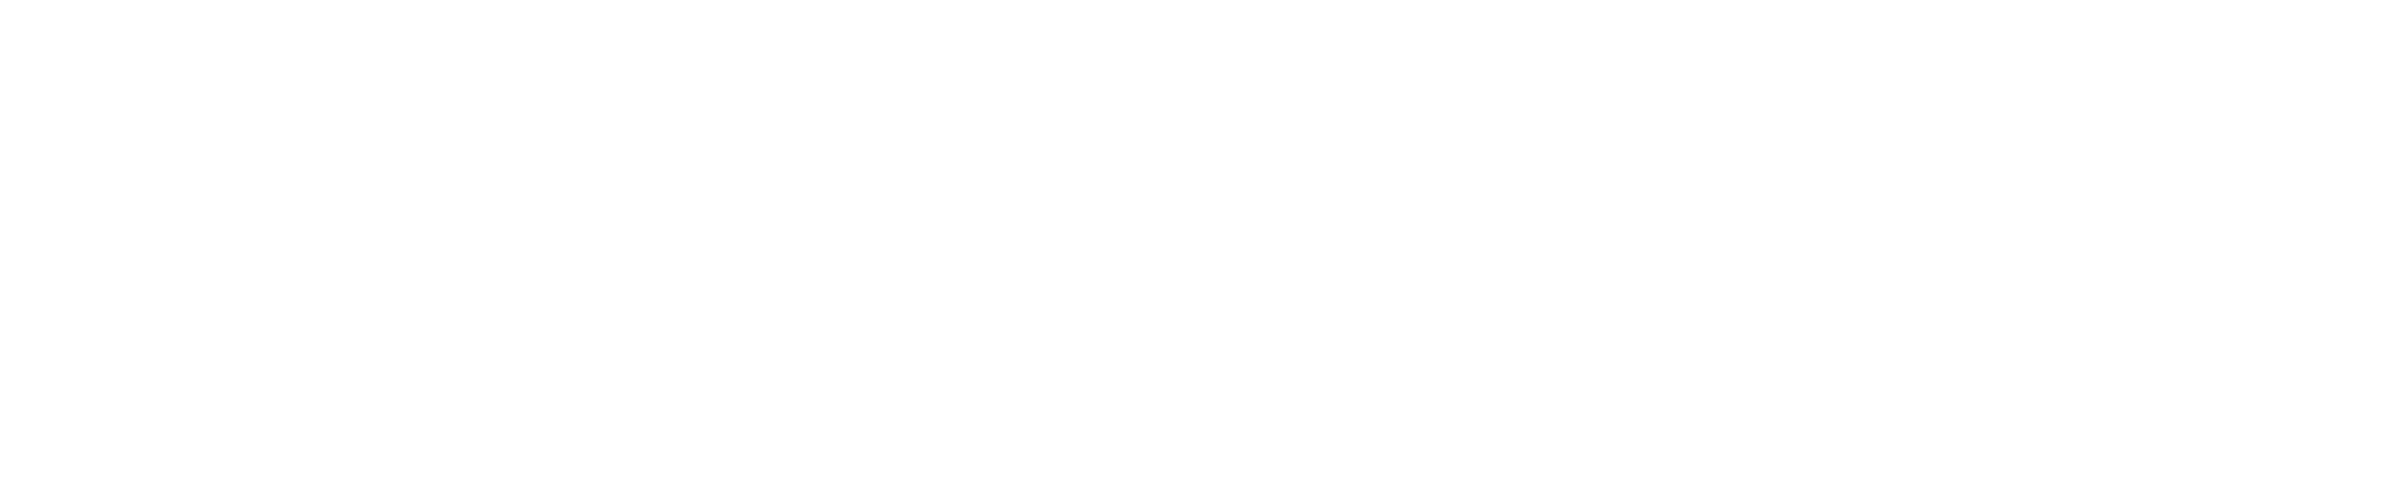 FoodAltas Logo